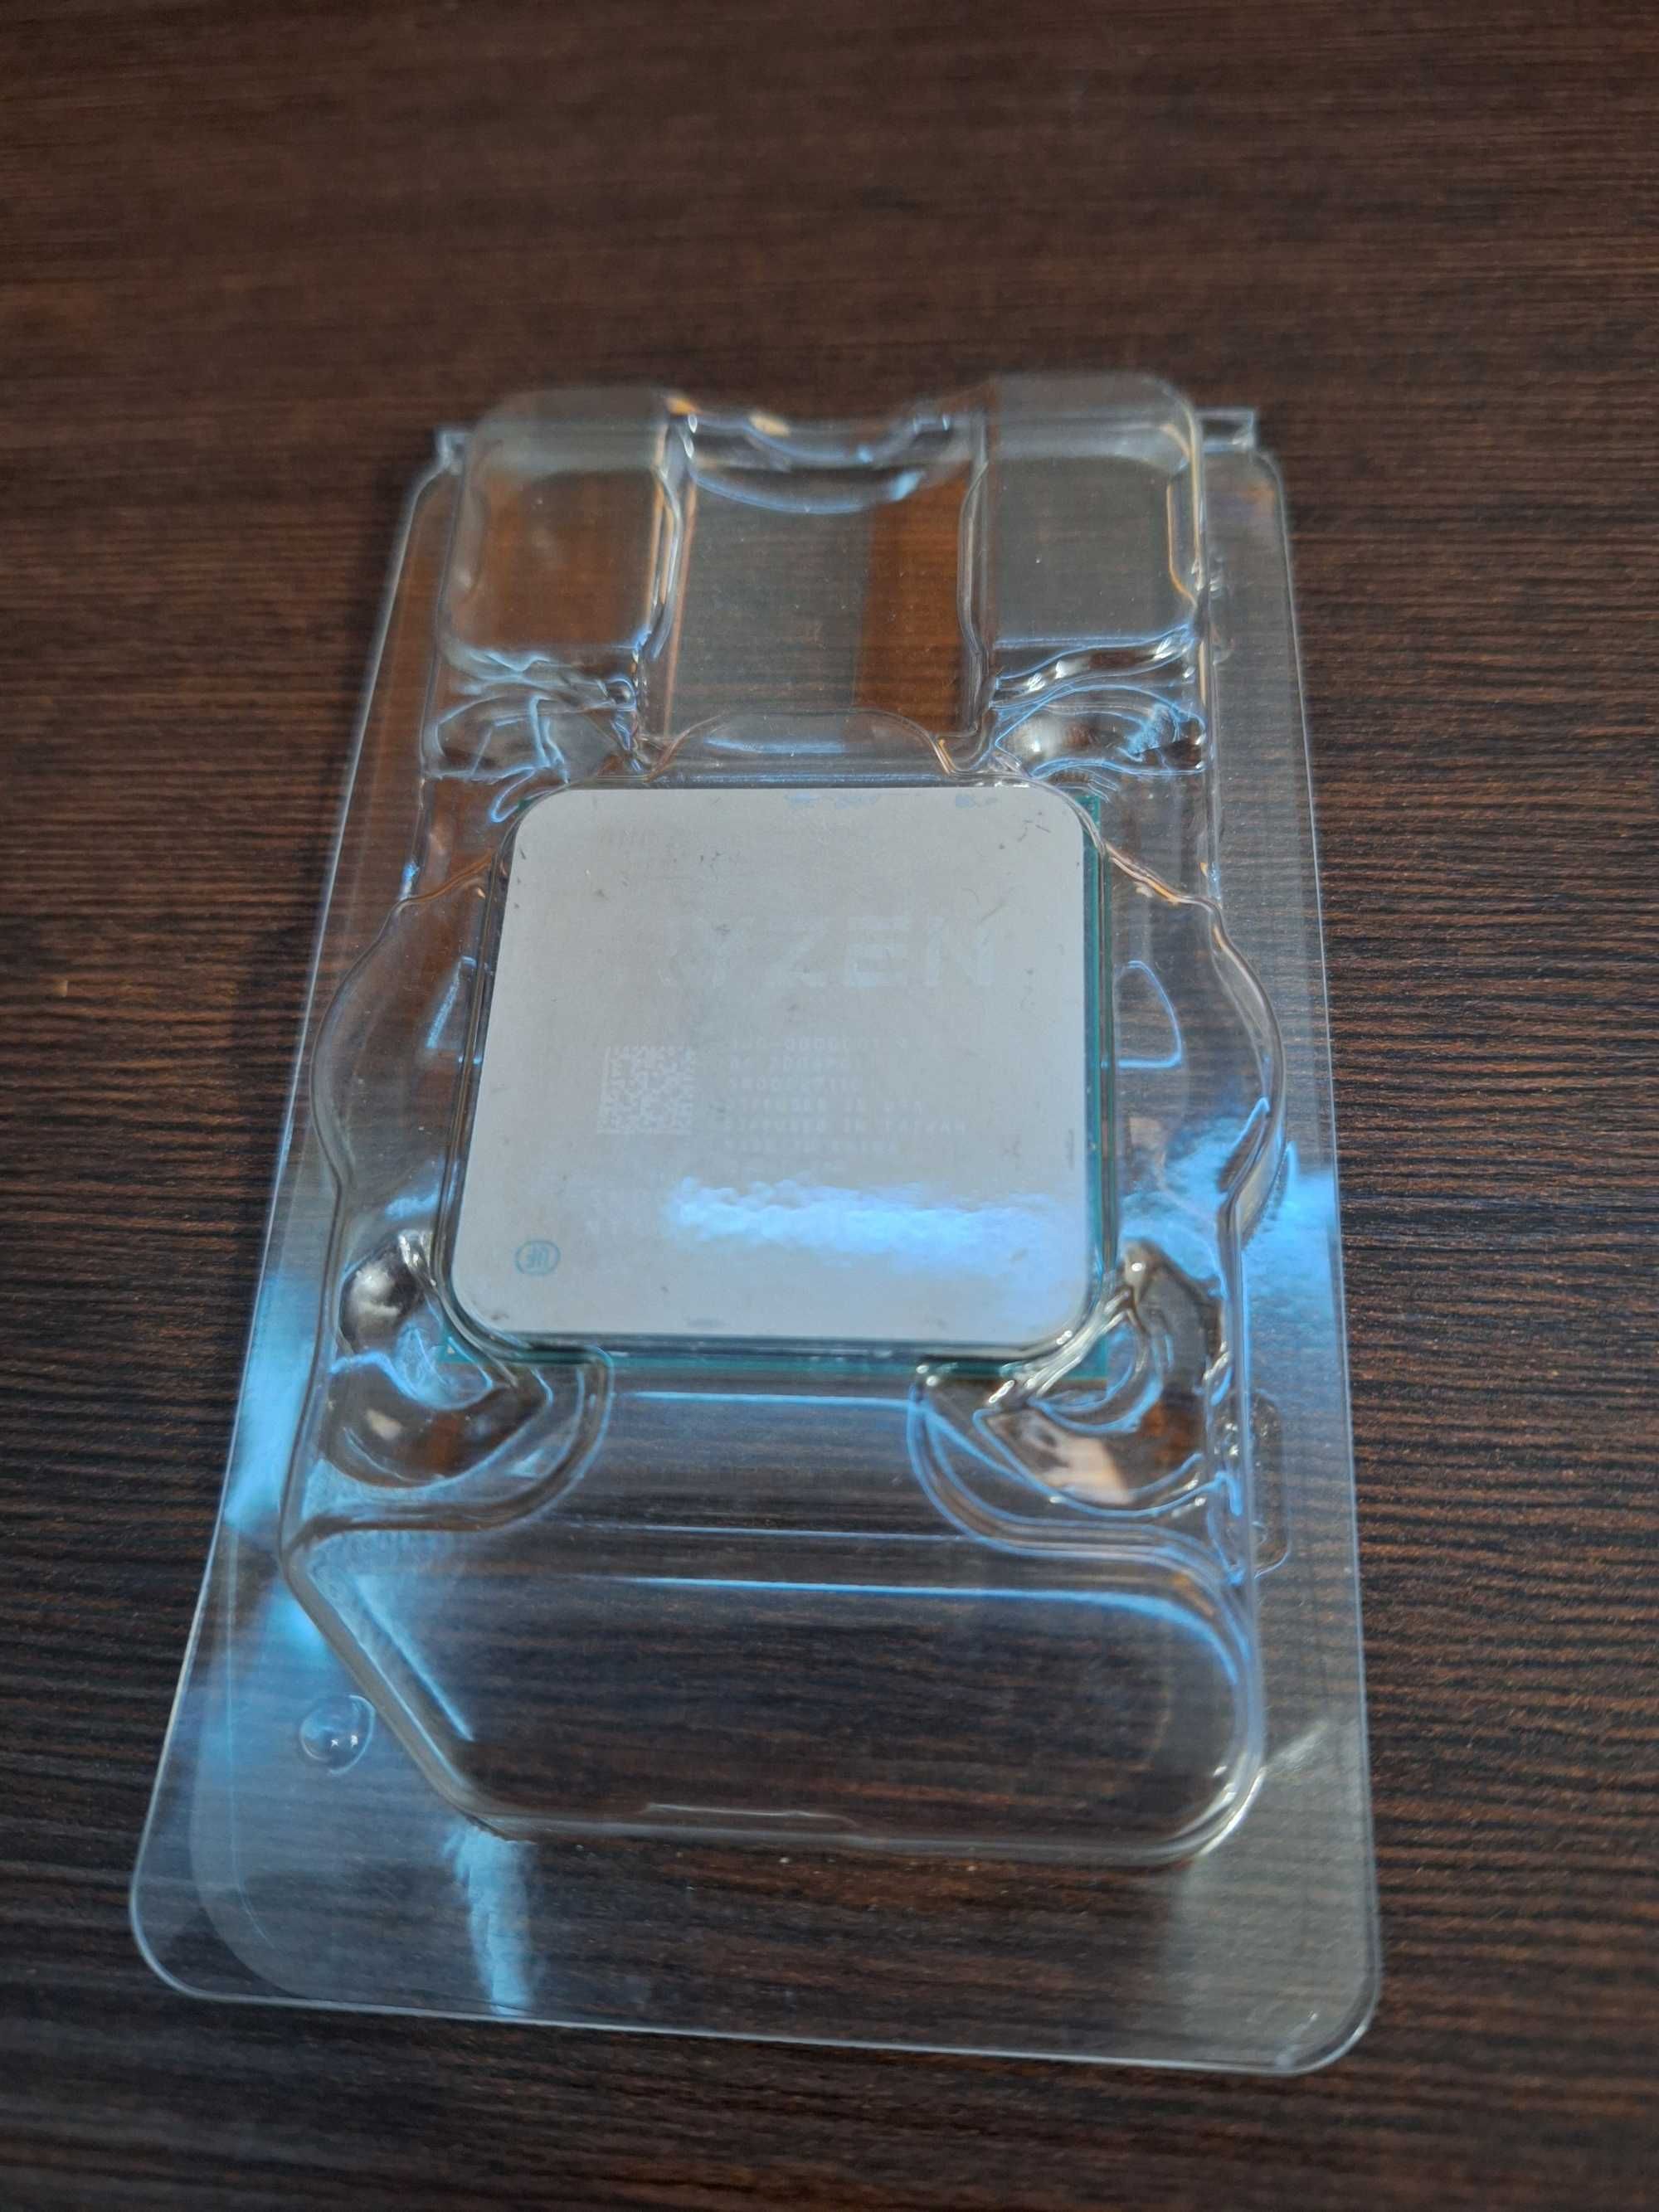 AMD ryzen 3 3300x 4-Core 3.8Hz AM4